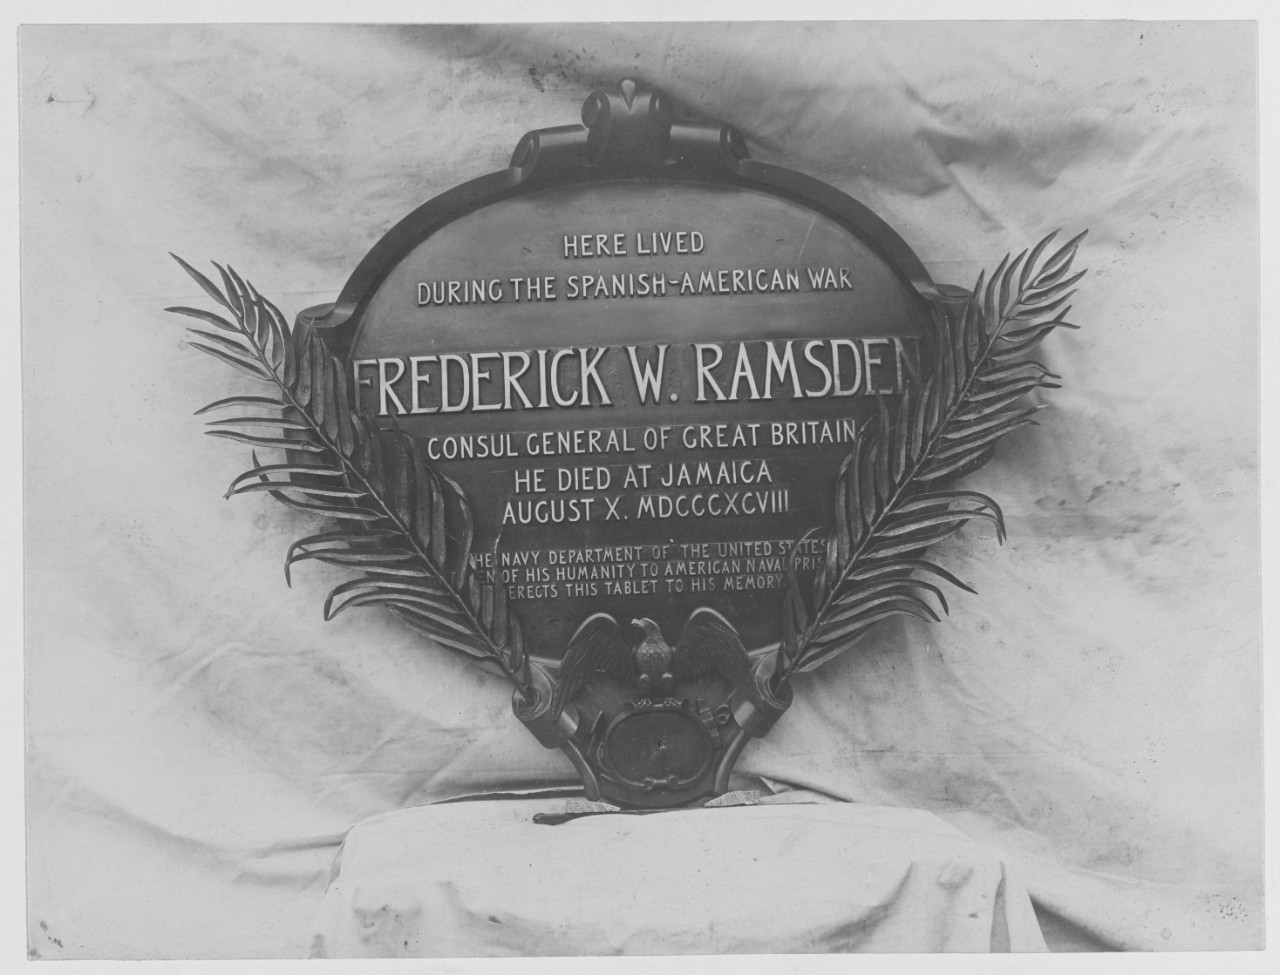 Frederick W. Ramsden